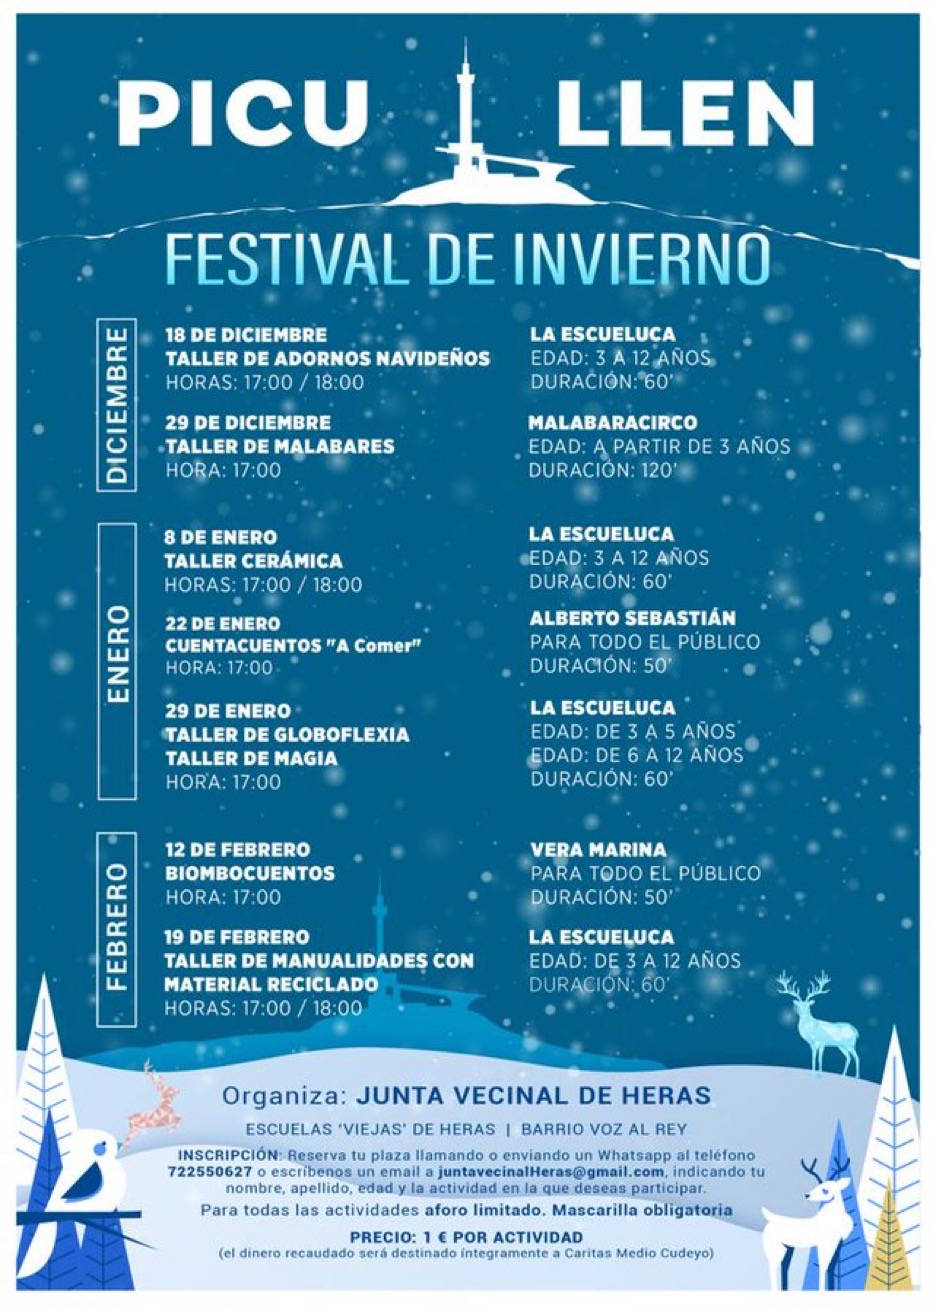 Festival de Invierno Picu Llen 2021